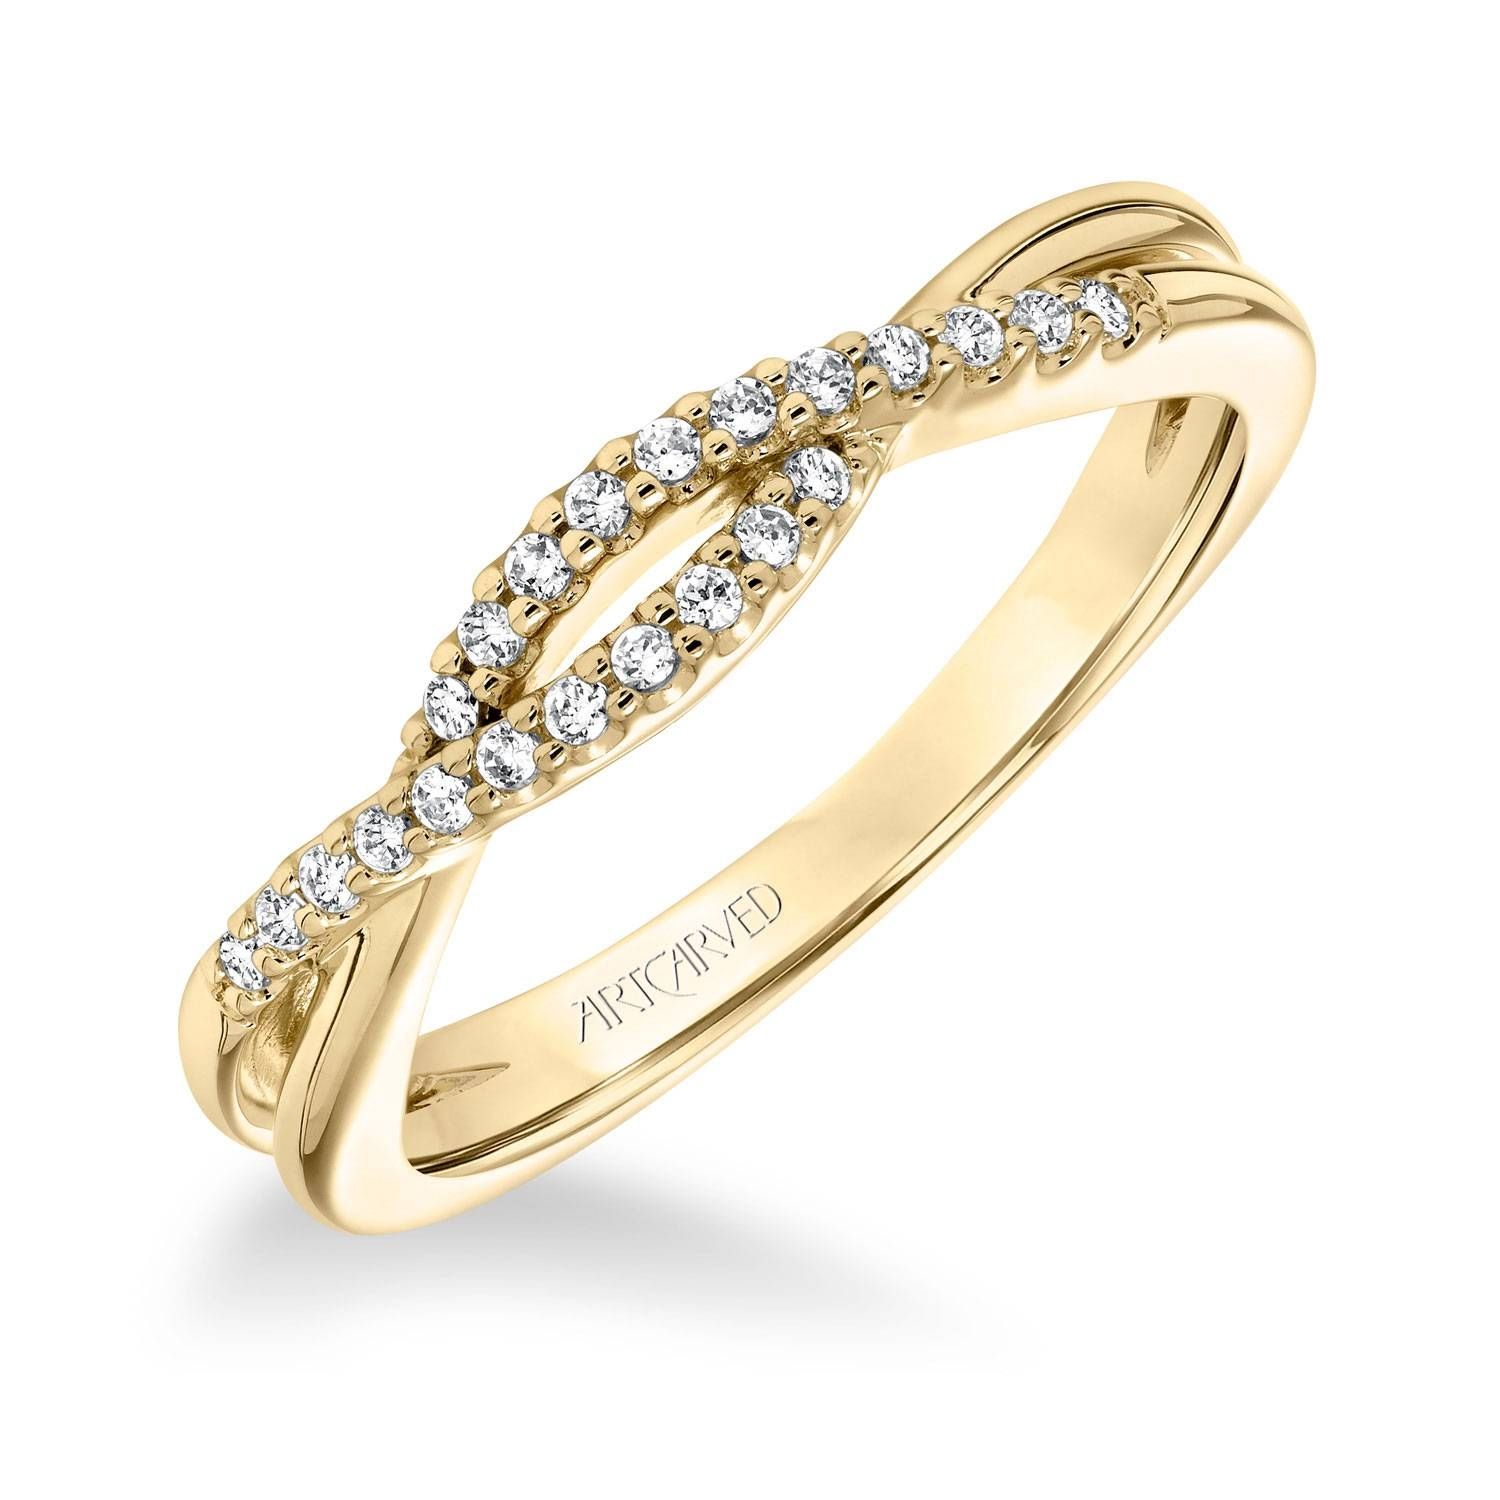 Anniversary Rings | Ben Bridge Jeweler Regarding Newest Wedding Anniversary Rings (View 16 of 25)